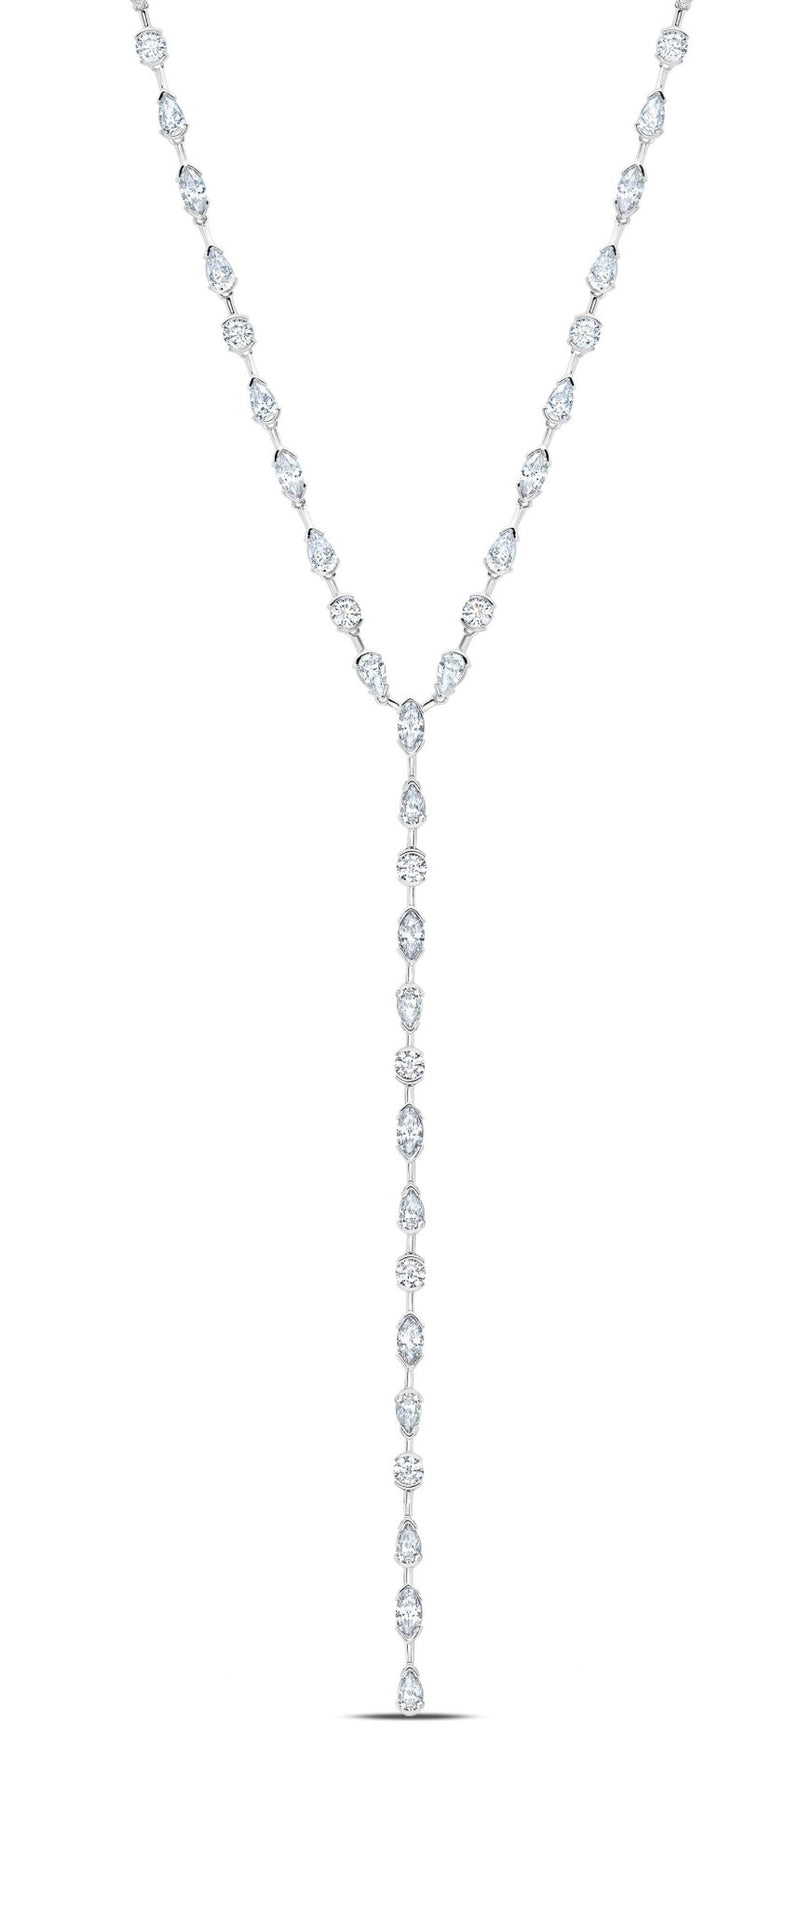 Lavish Y-Shaped CZ Necklace Finished in Pure Platinum - CRISLU